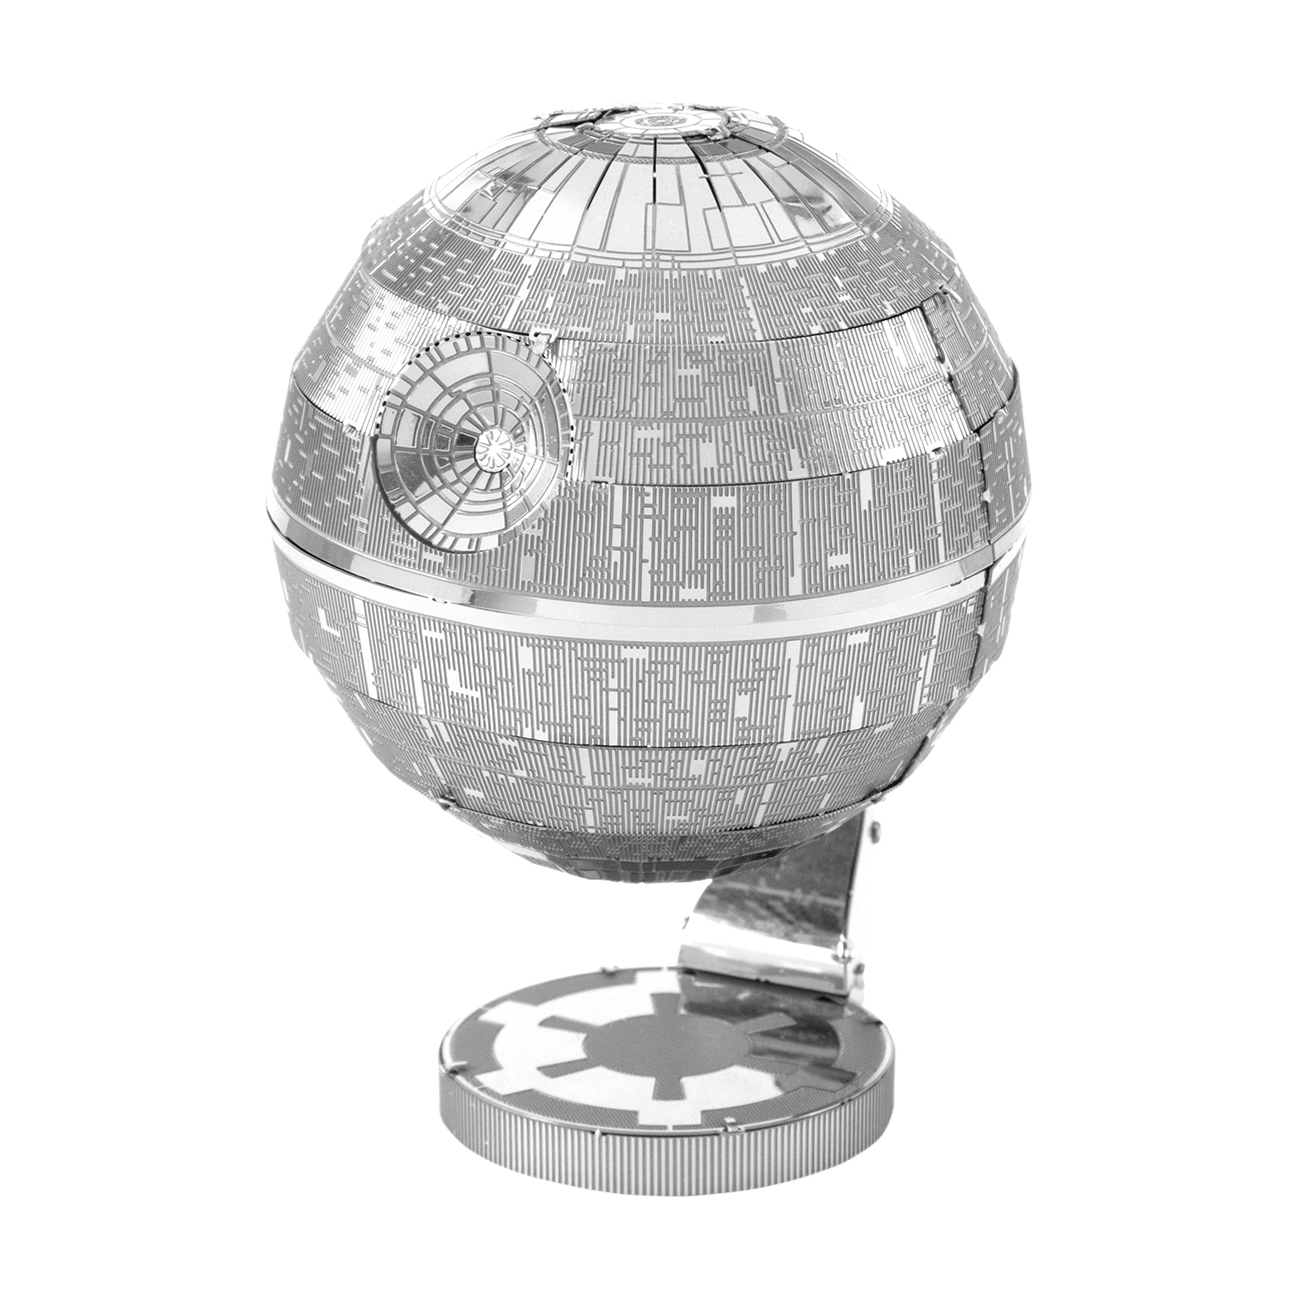 Fascinations Toys & Gifts Metal Earth 3D Metal Model Kit - Star Wars Death Star